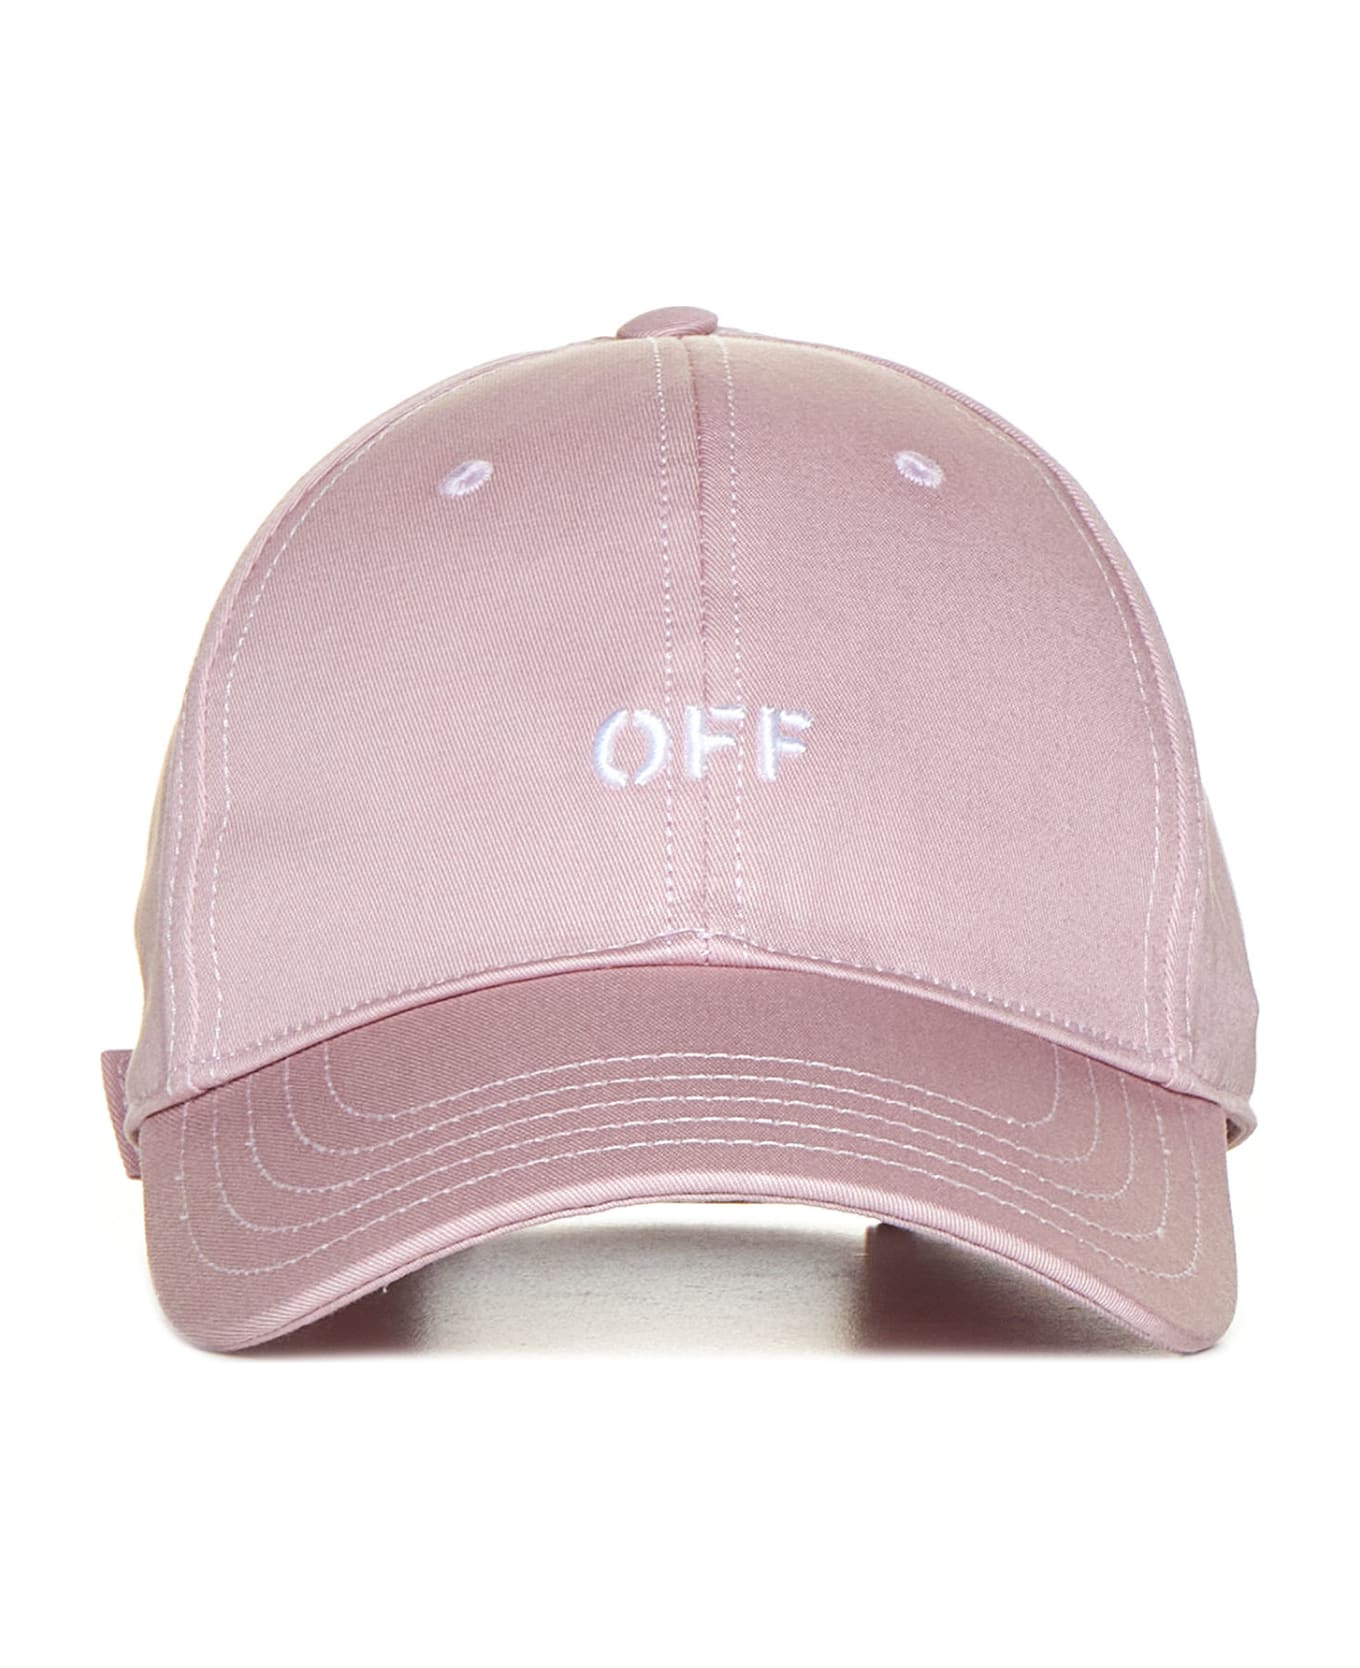 Off-White Baseball Cap - Pink